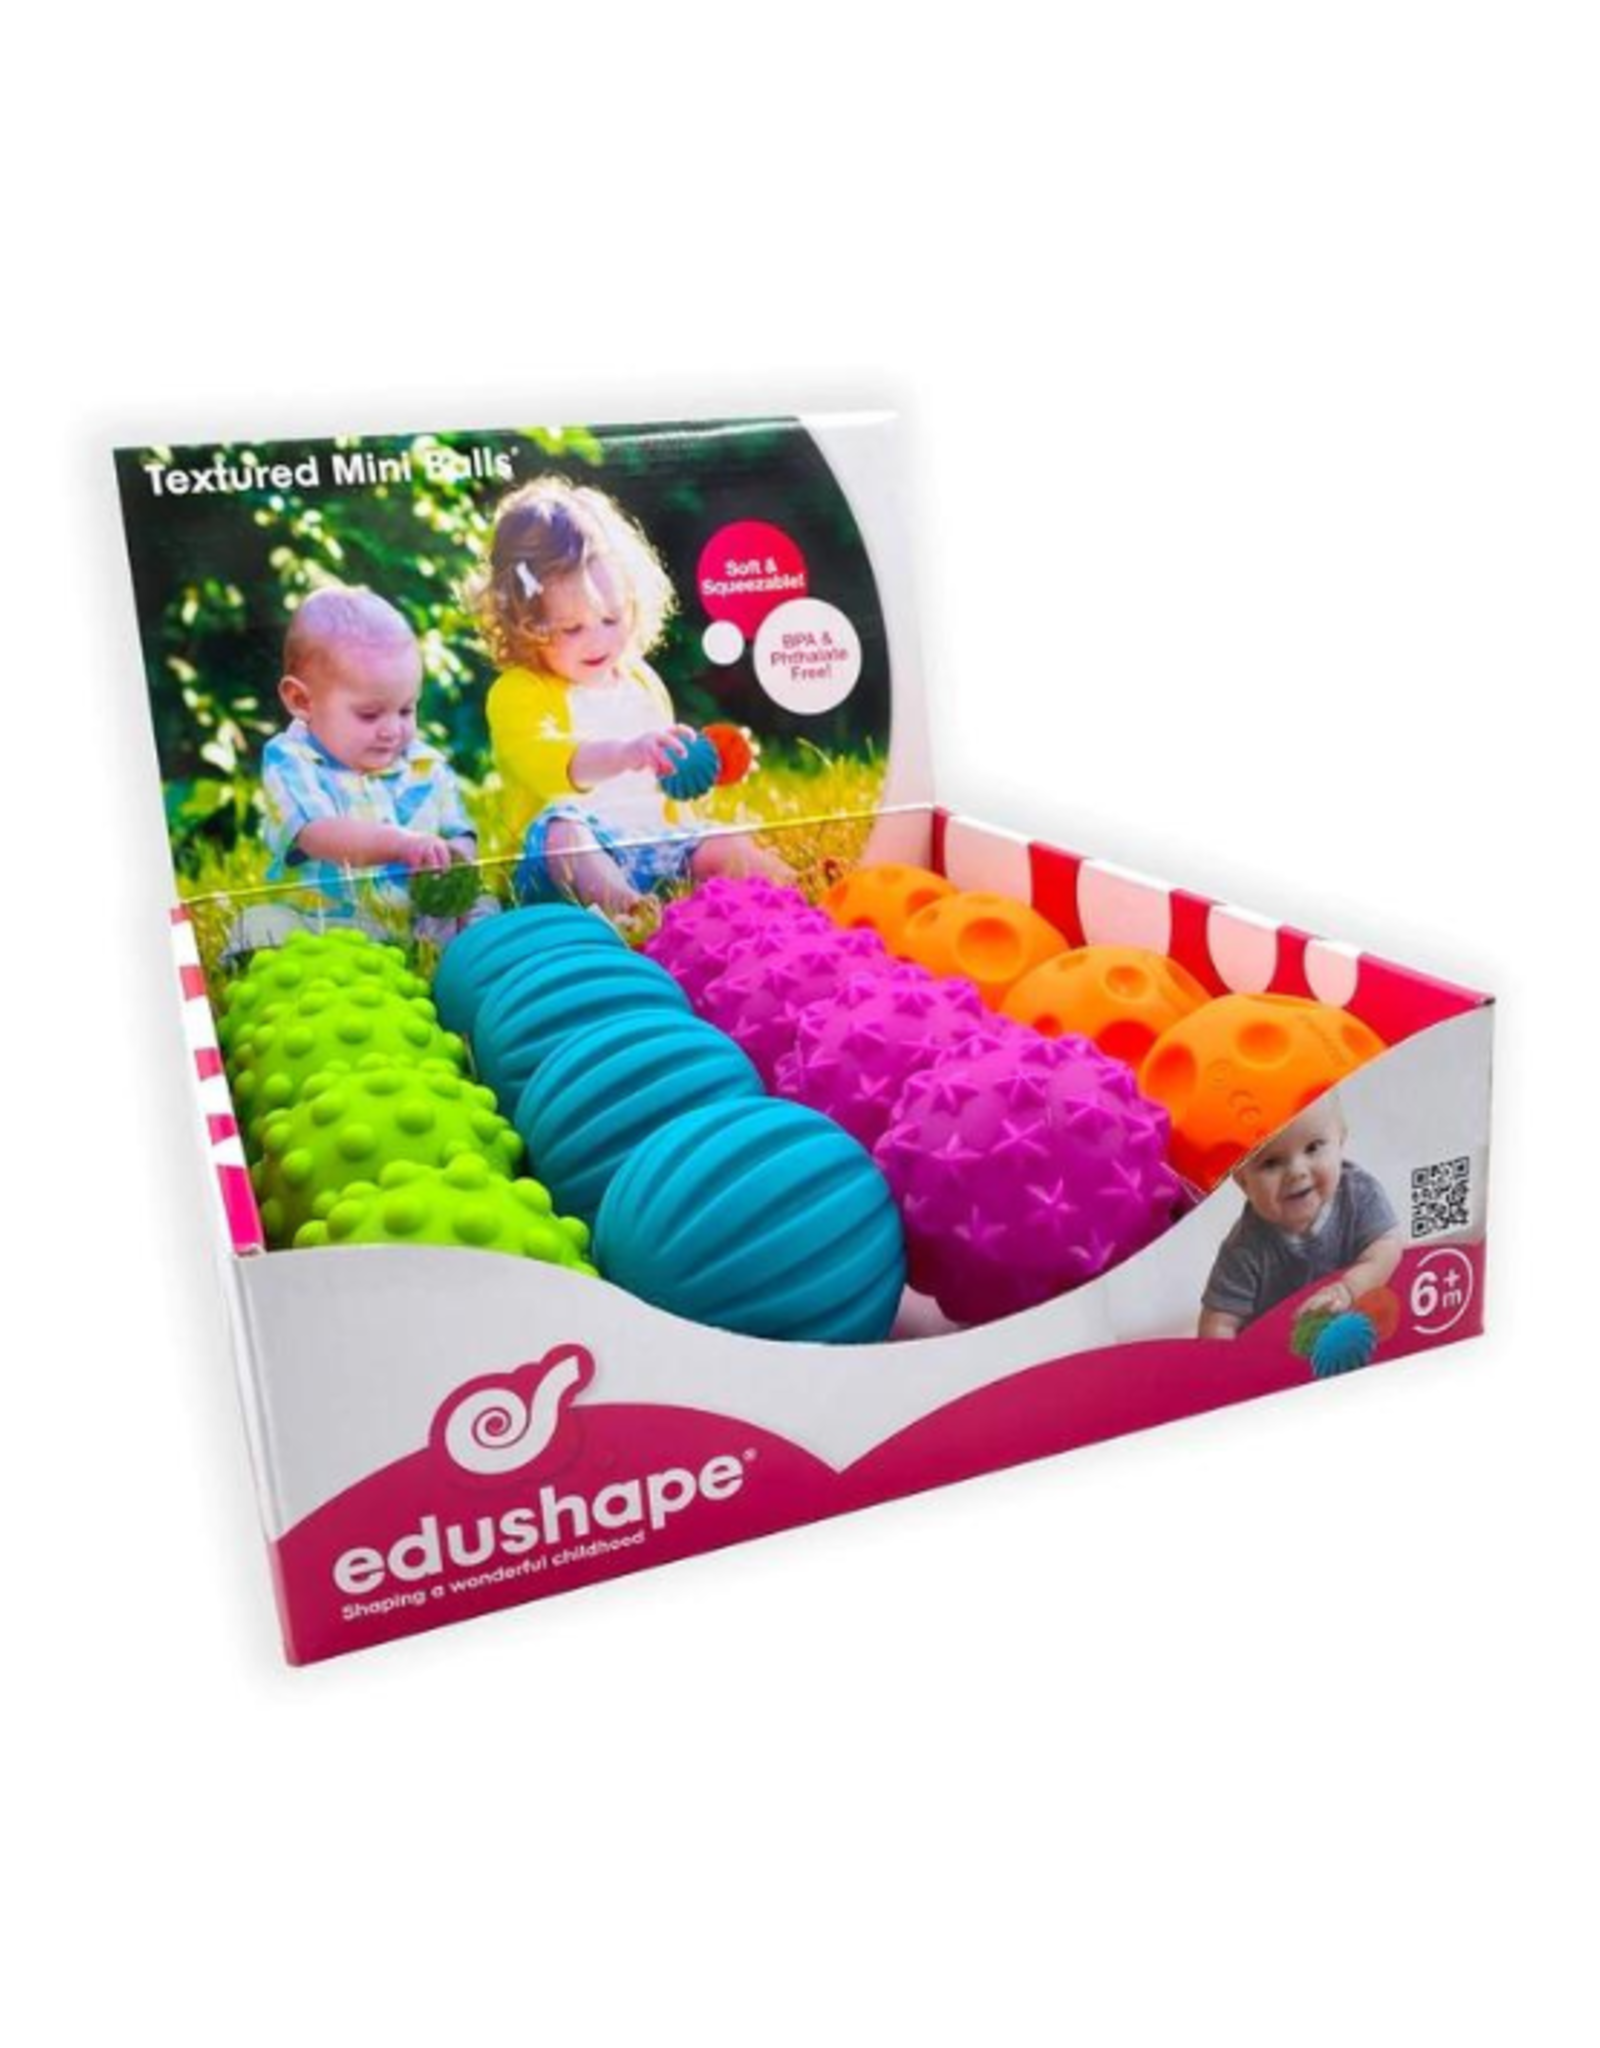 Edushape - Textured Mini Balls